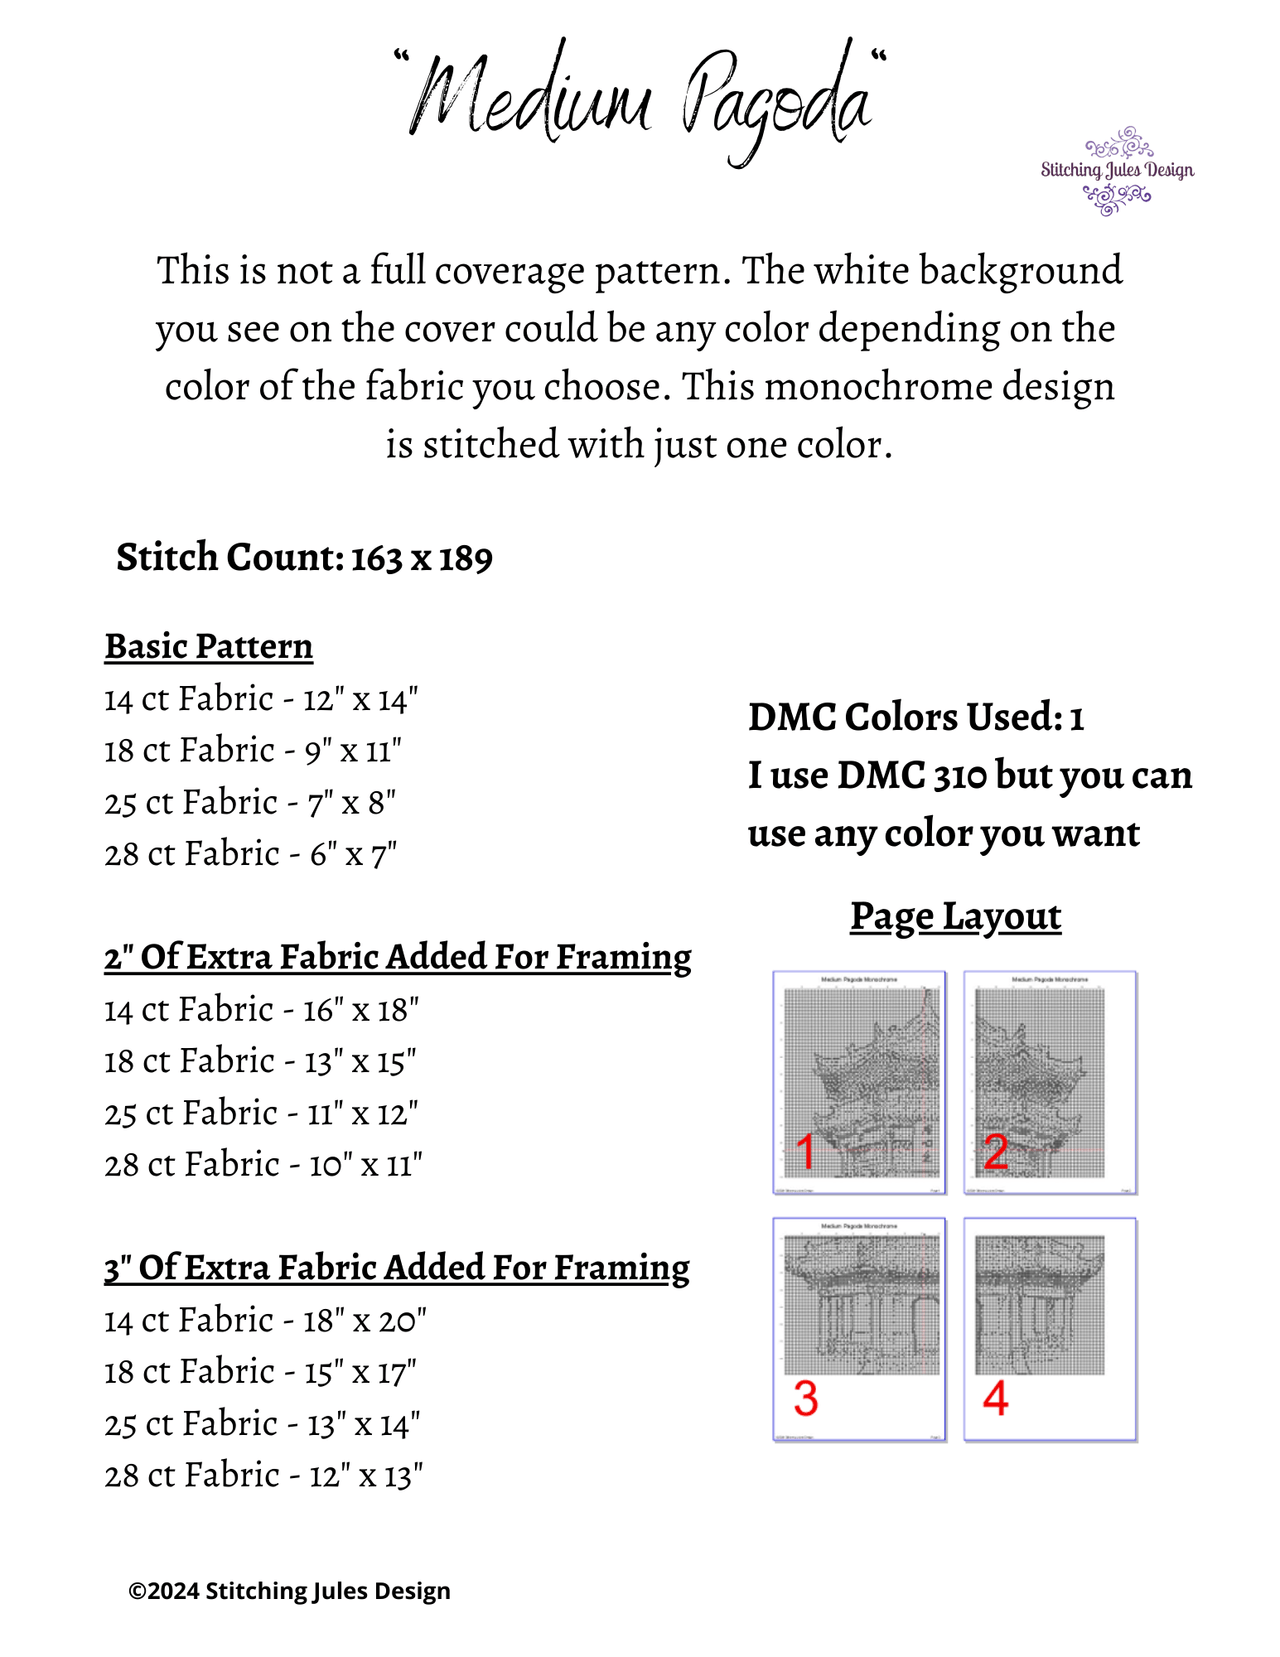 Stitching Jules Design Cross Stitch Pattern Medium Japanese Pagoda Monochrome Counted Cross-Stitch Pattern | Instant Download PDF